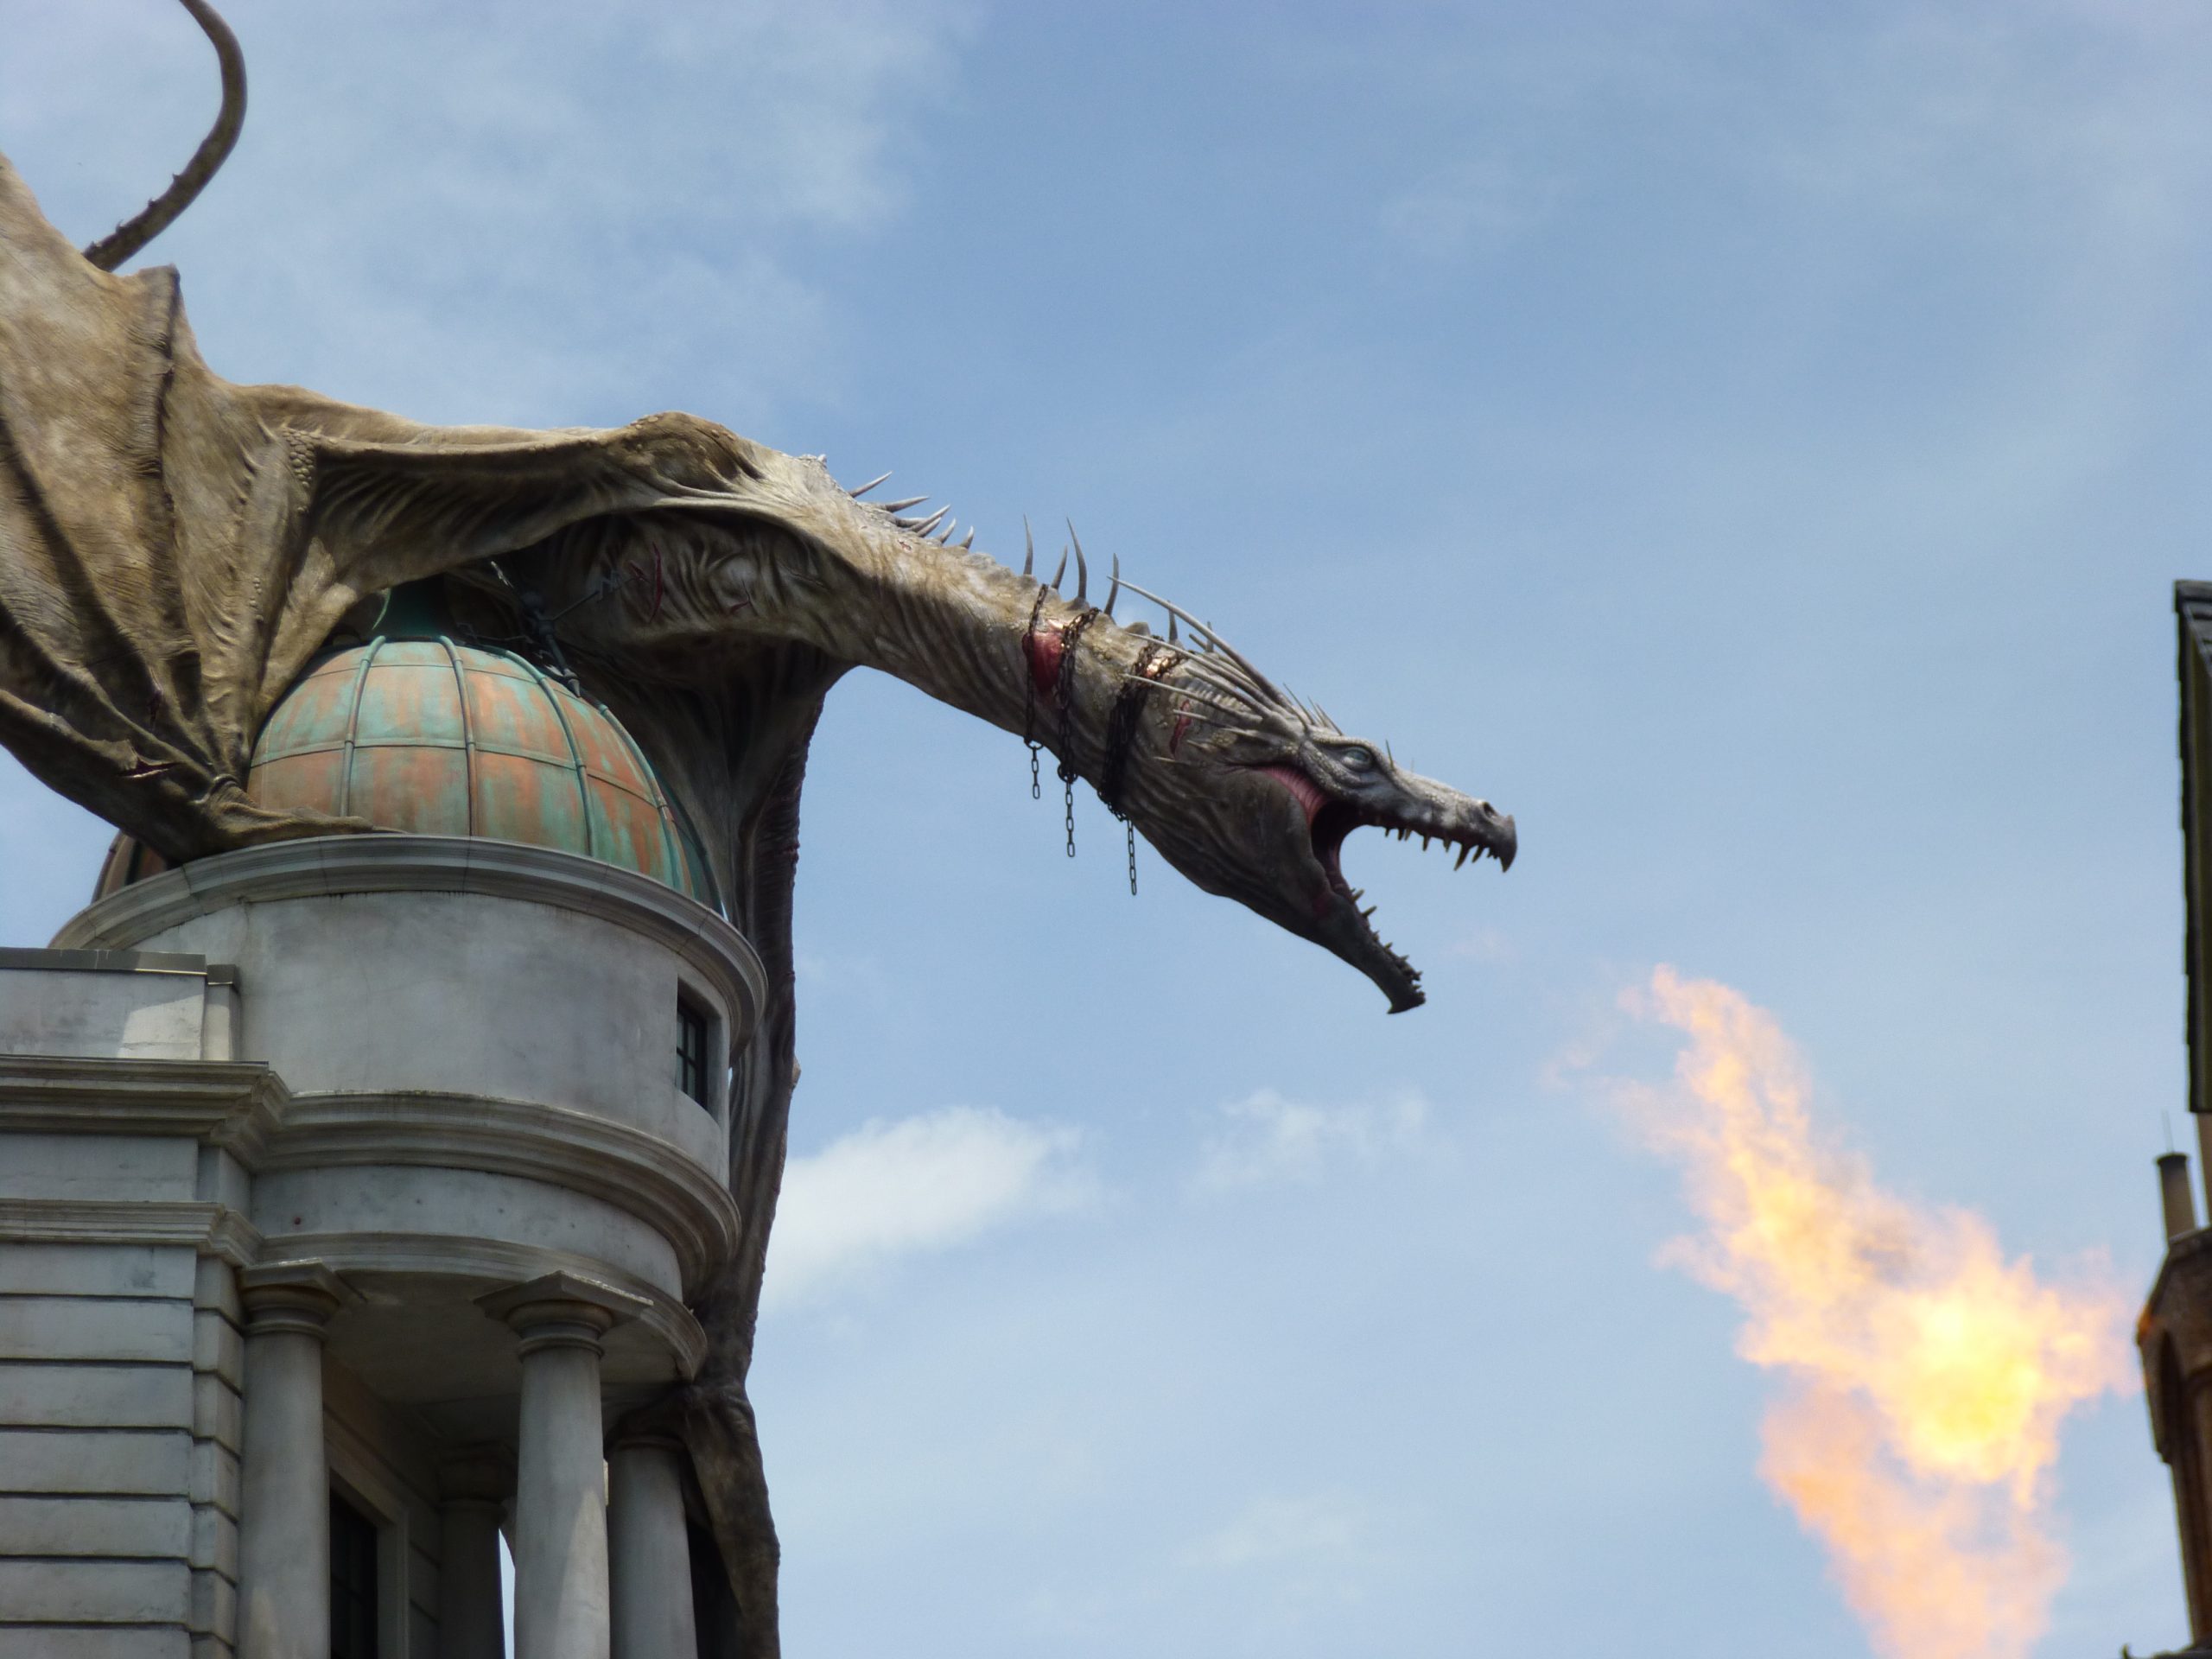 Universal Studios Japan Upgrades The Forbidden Journey to 3D